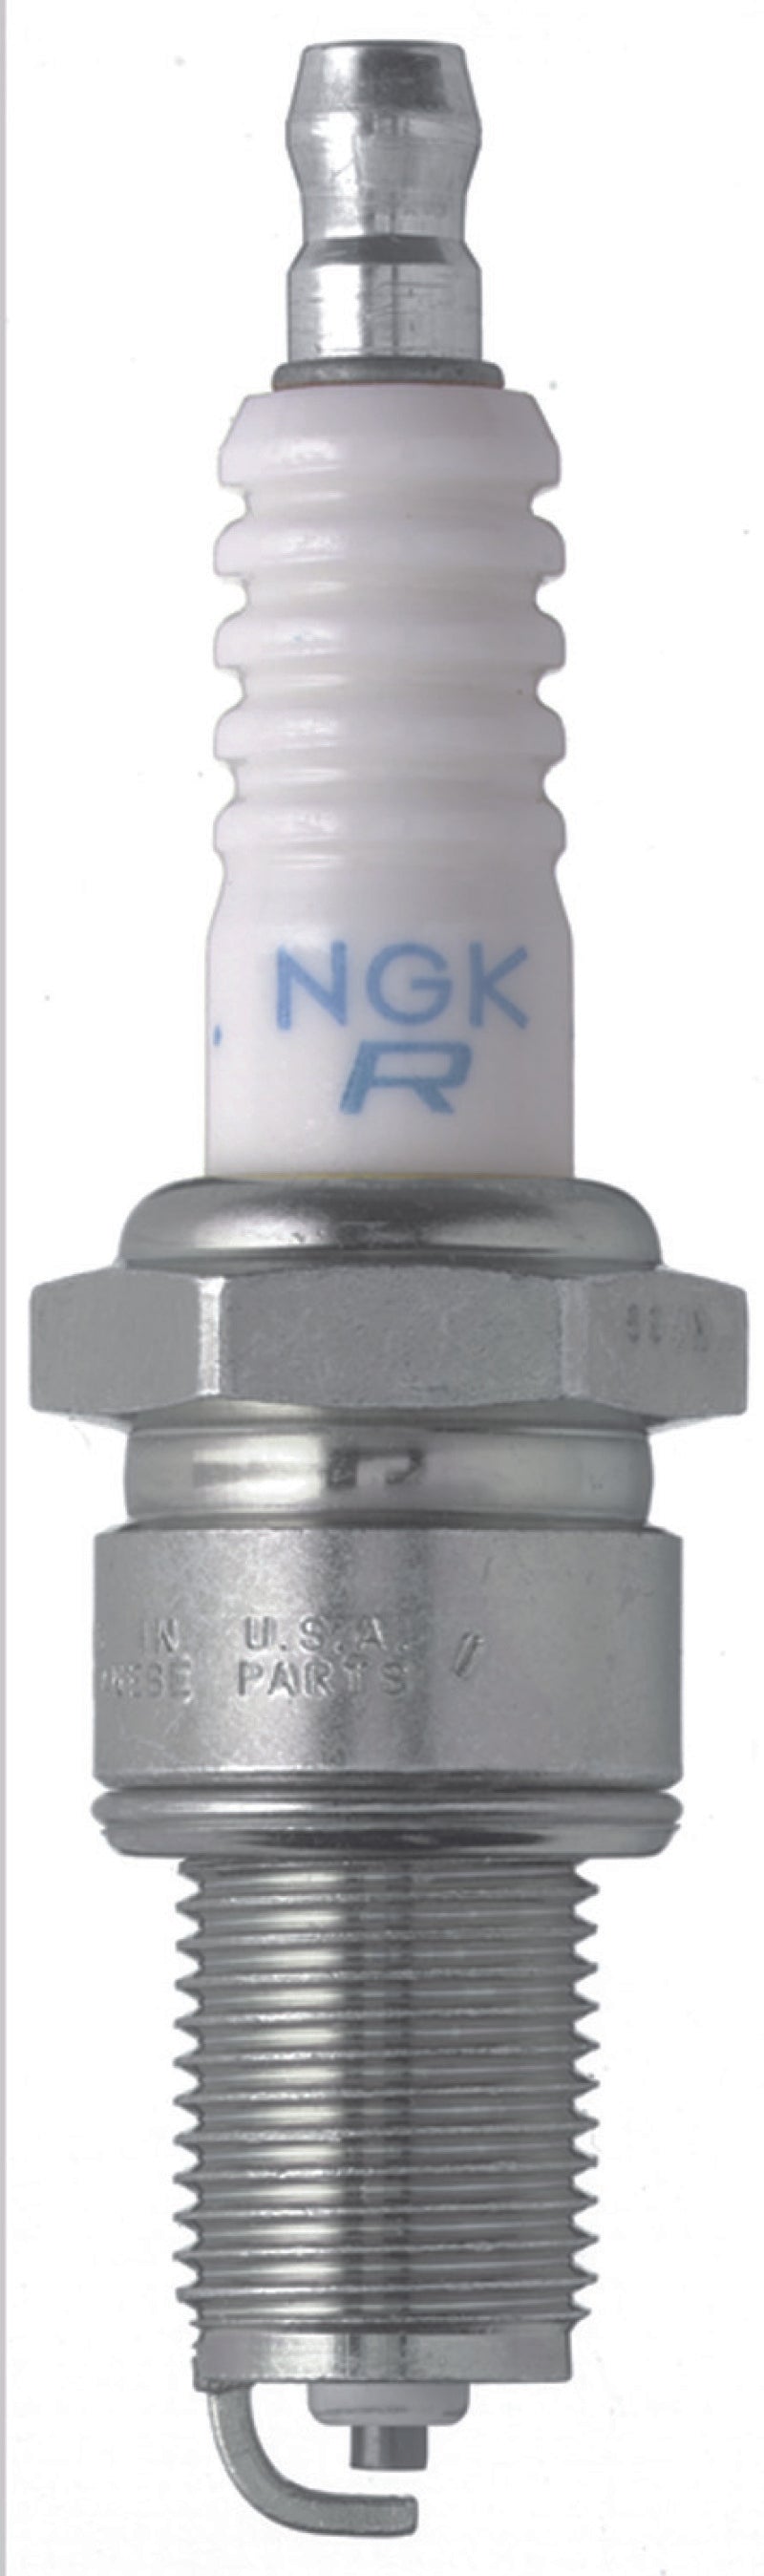 NGK Copper Nickel Alloy Spark Plug Box of 4 (BPR8ES).